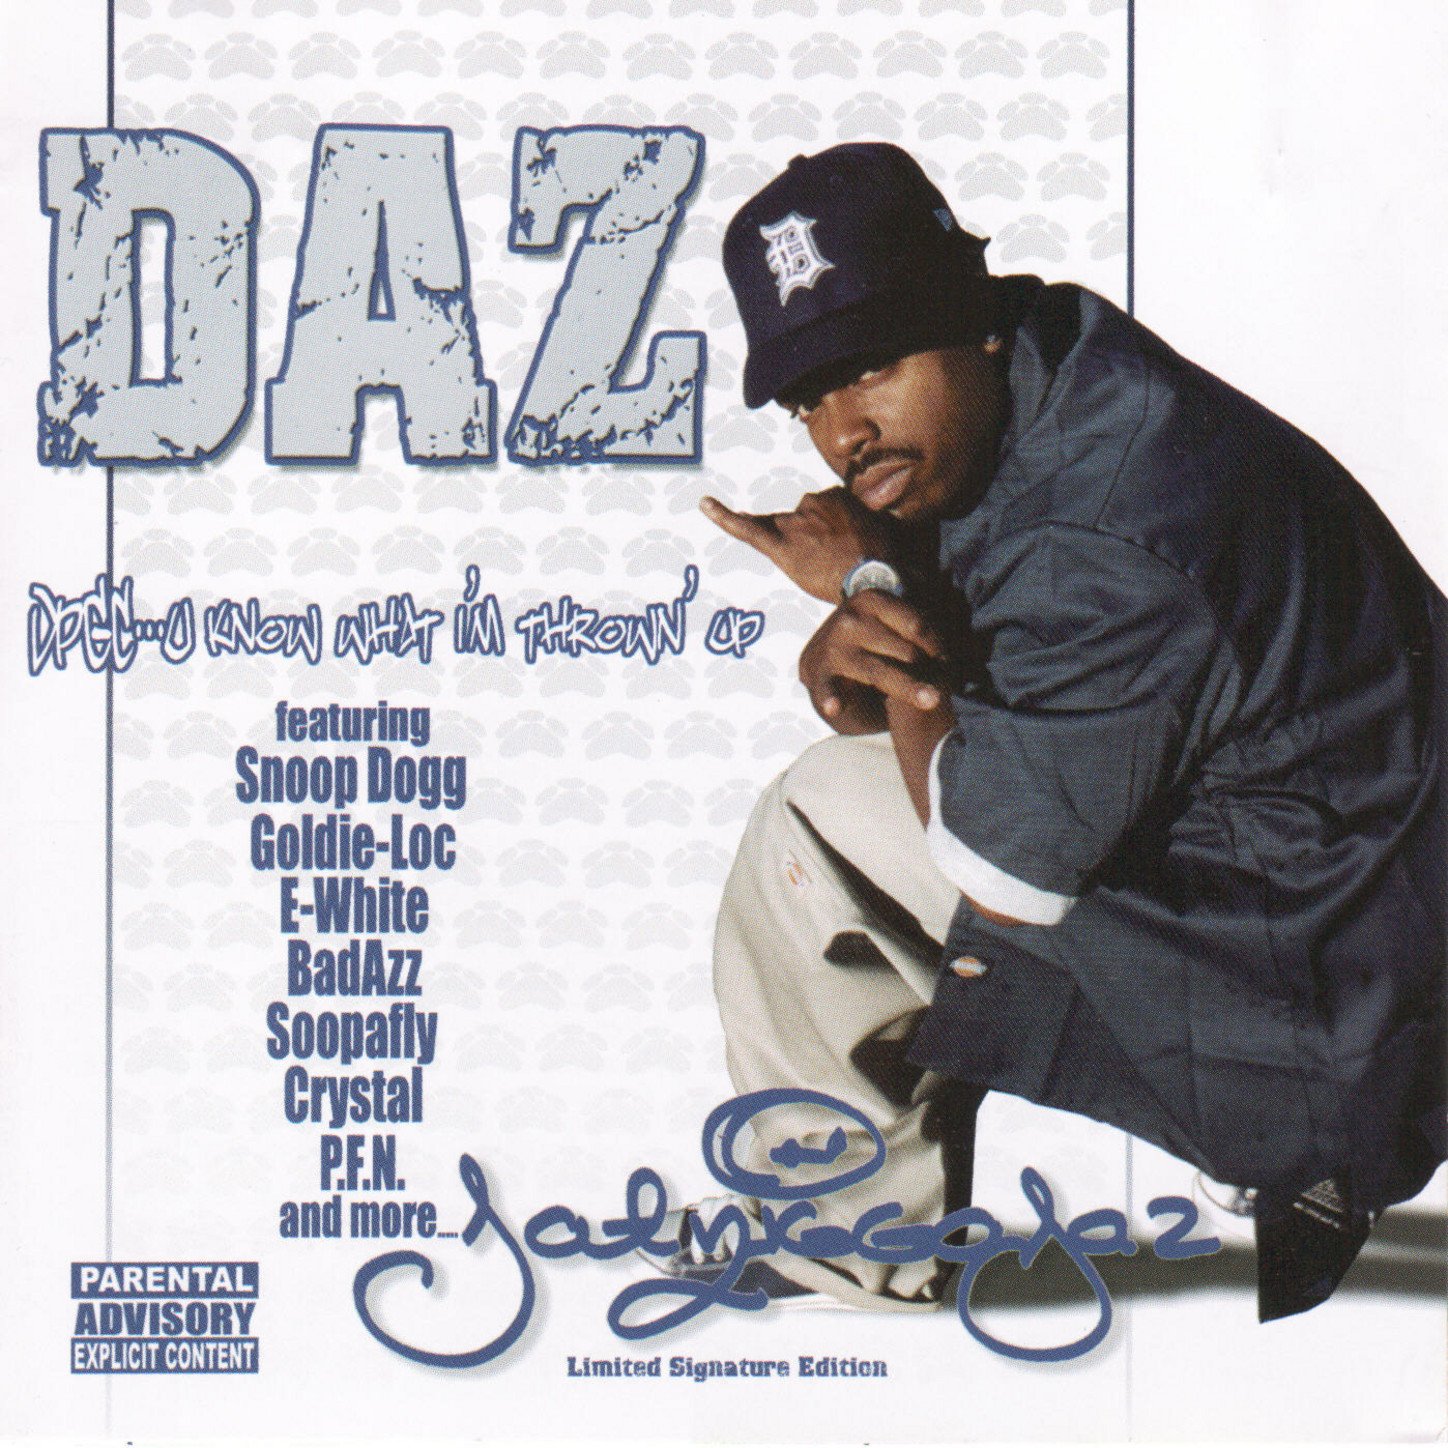 Daz - DPGC: U Know What I'm Throwin' Up (2003) FLAC Download